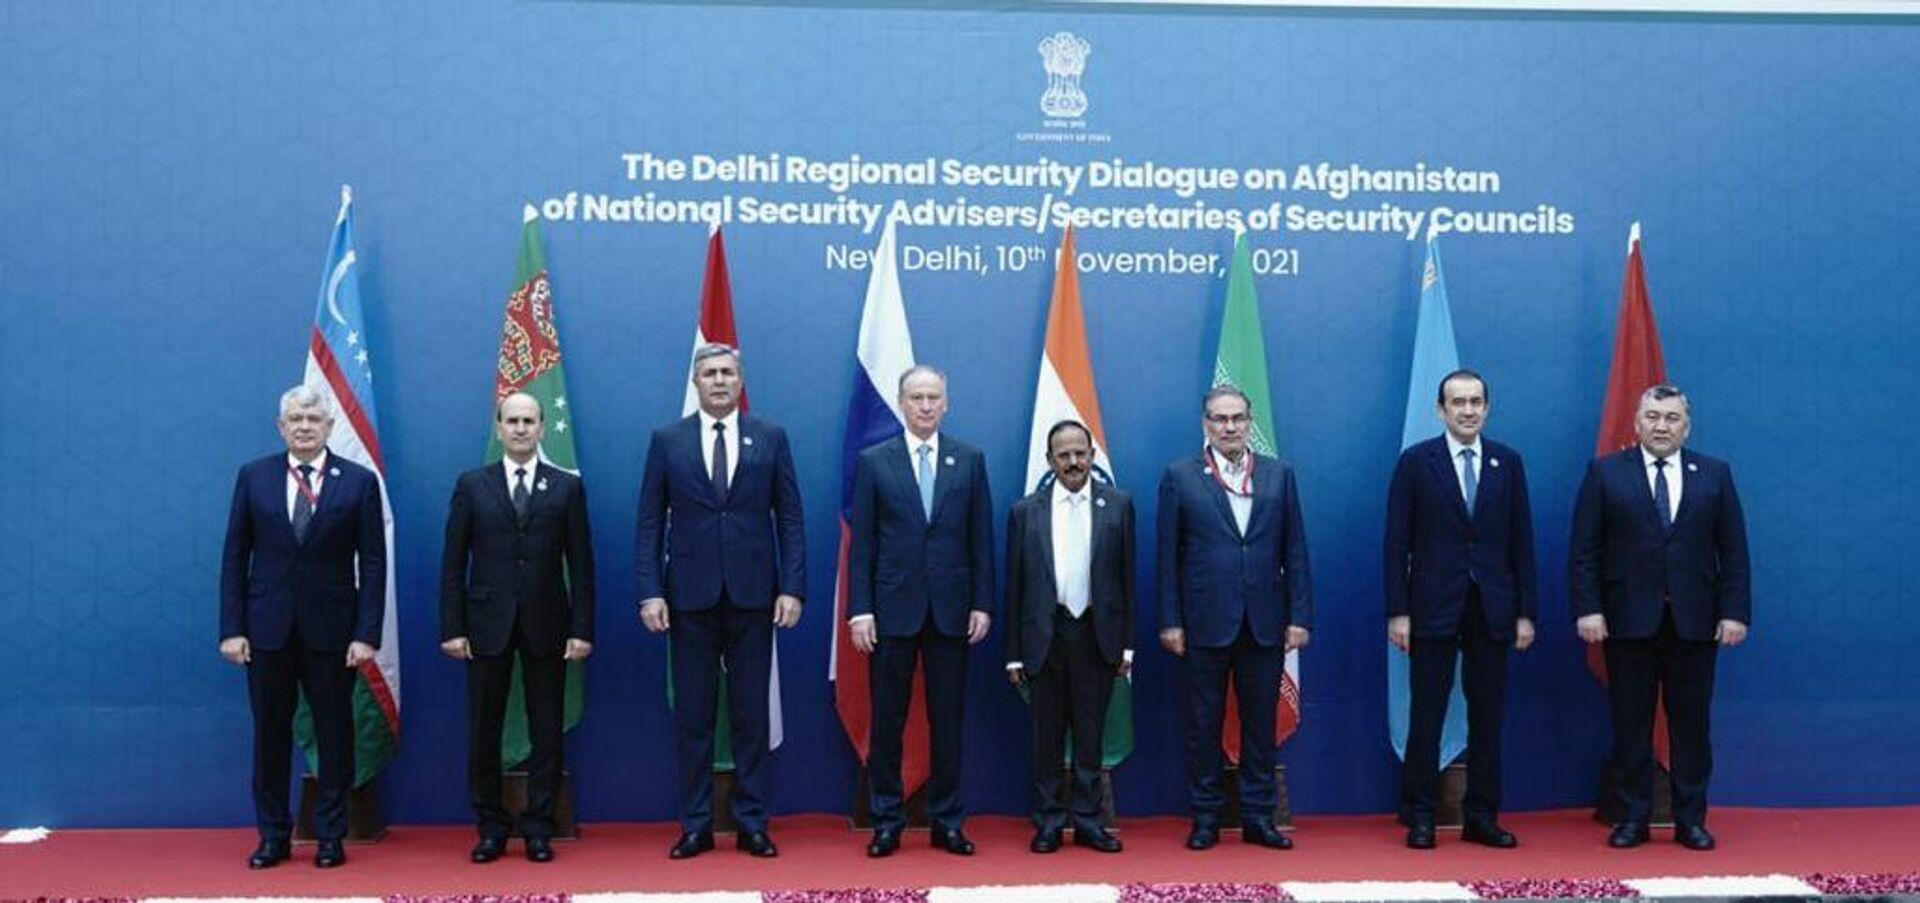 The Delhi Regional Security Dialogue on Afghanistan - Sputnik International, 1920, 10.11.2021